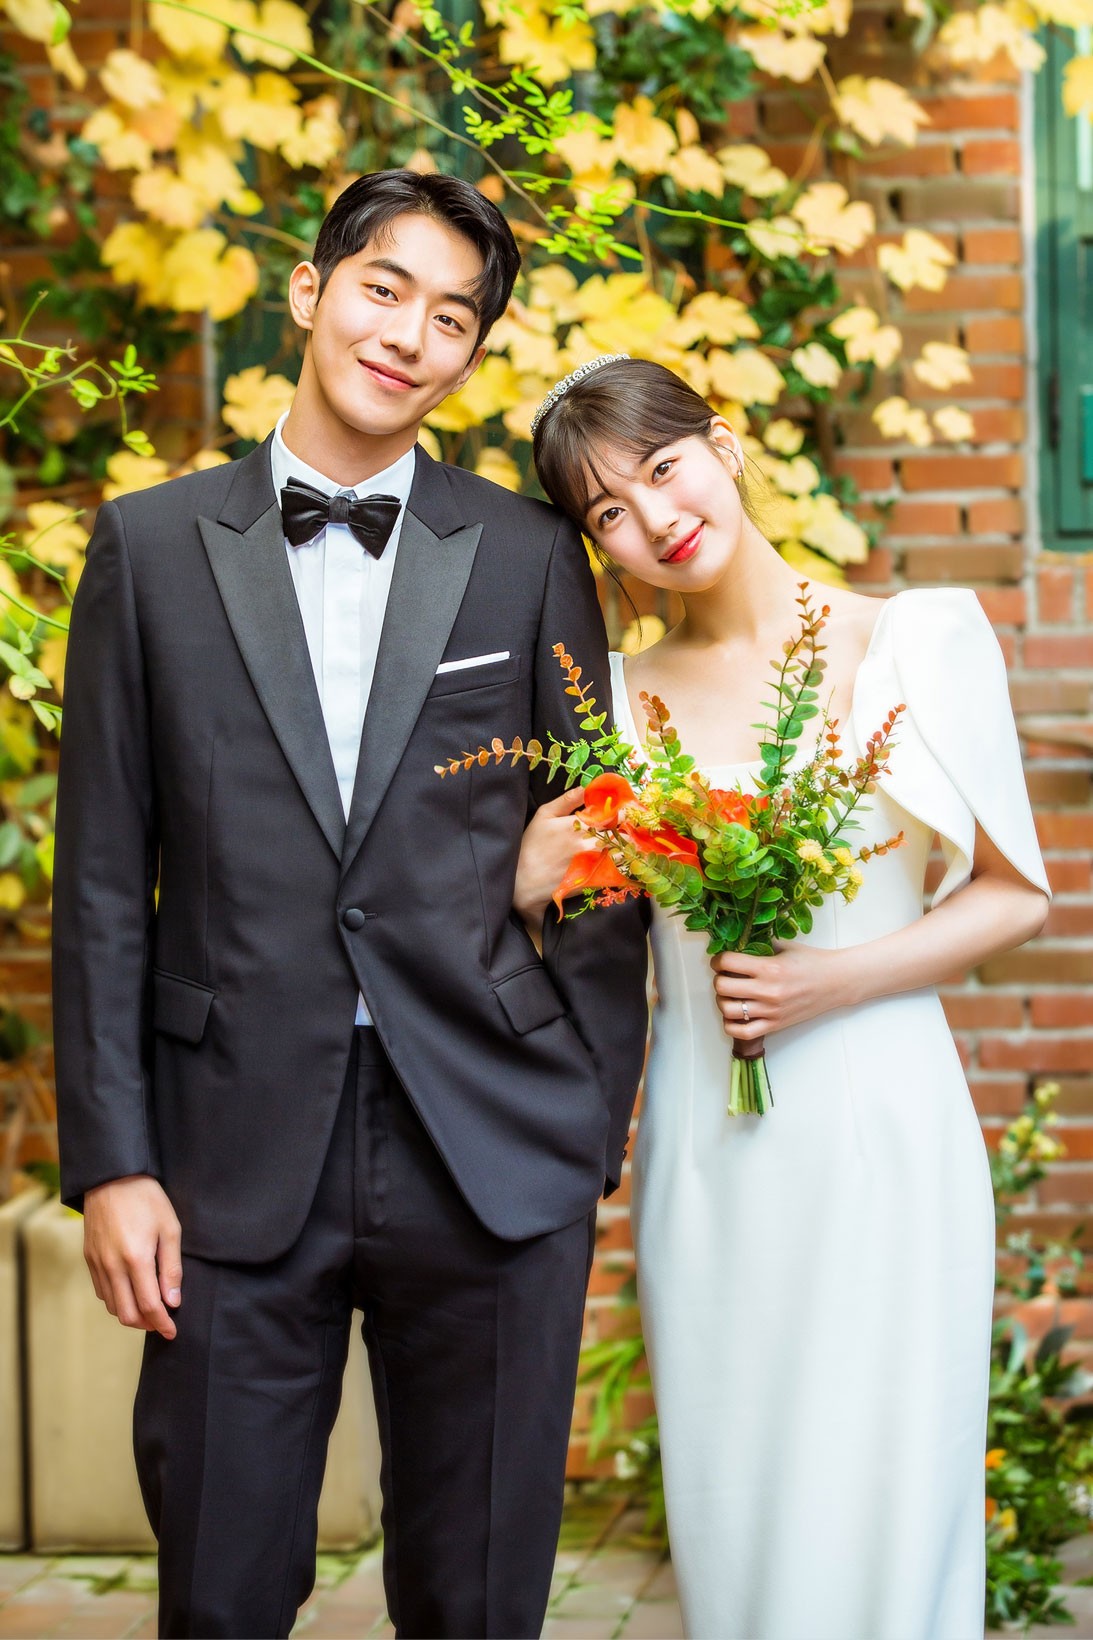 Suzy Bae's Wedding Look From "Start Up" – Yow Yow!